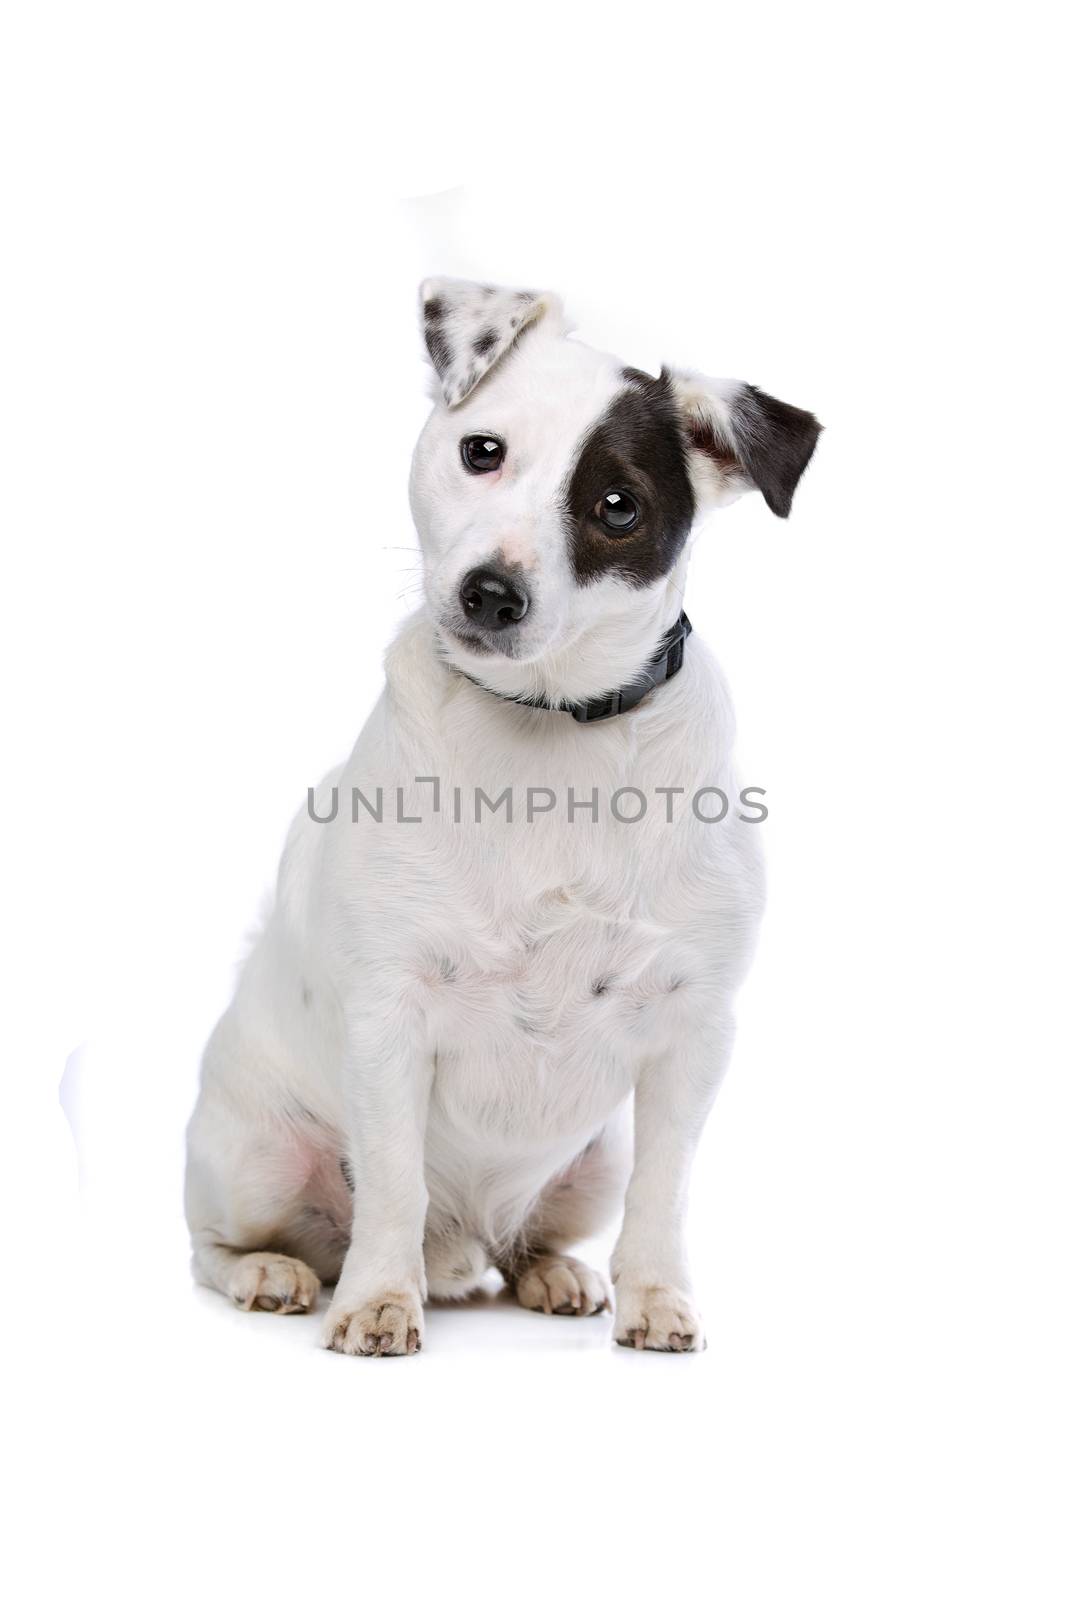 Jack Russel Terrier by eriklam